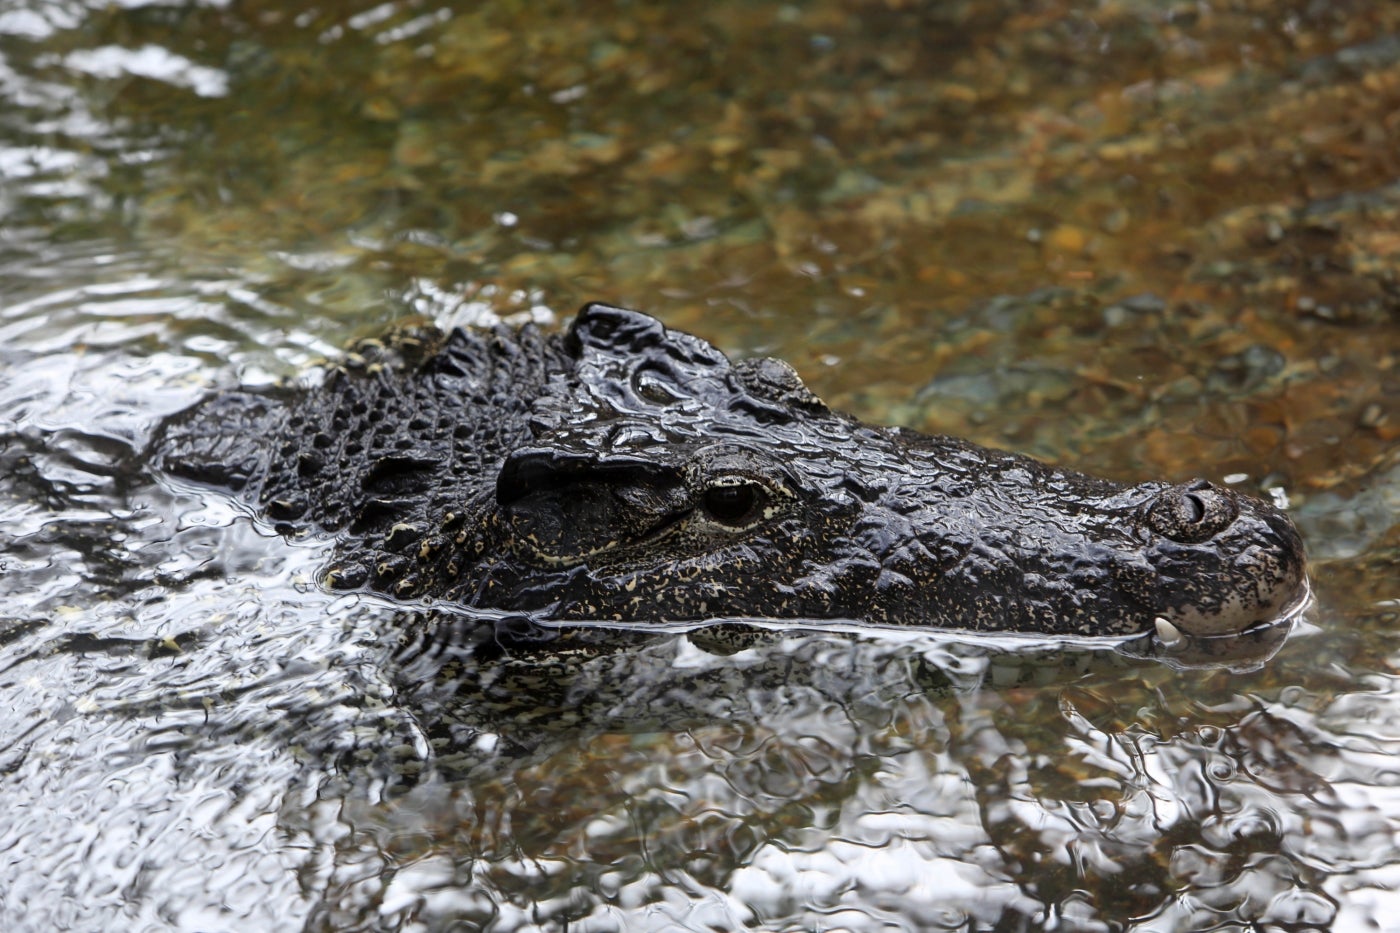 Cuban Crocodile Jefe in the water